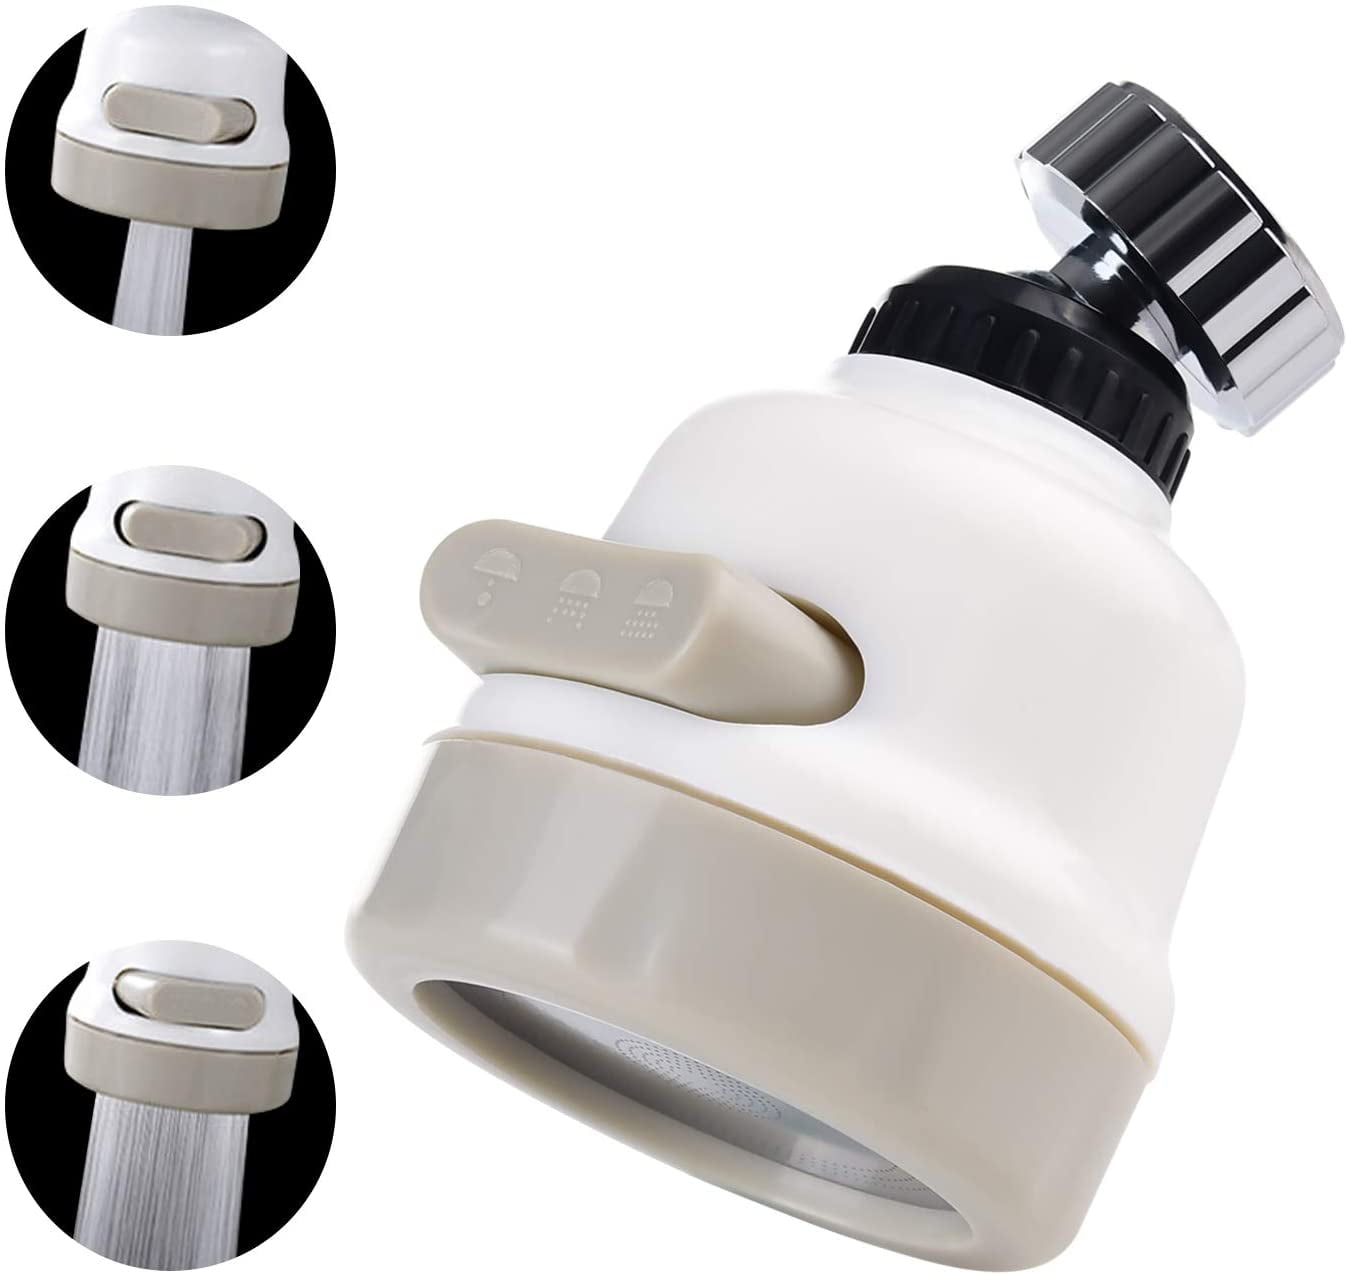 Water Swivel Faucet Sprayer Aerator,3 Modes Universal Long Water Saving Faucet Sprayer Head Extension,360°Adjustable